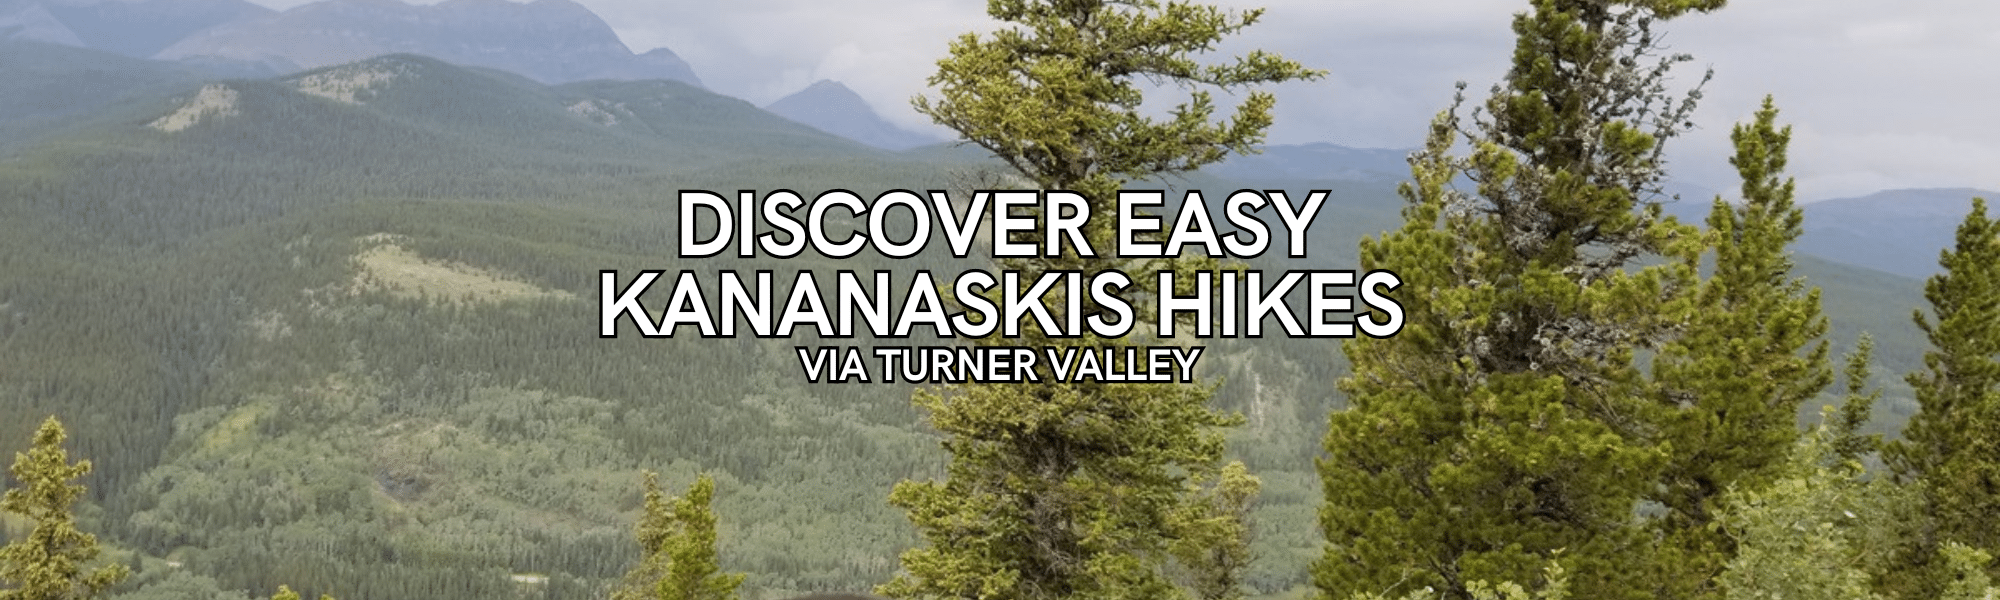 discover easy kananaskis hikes